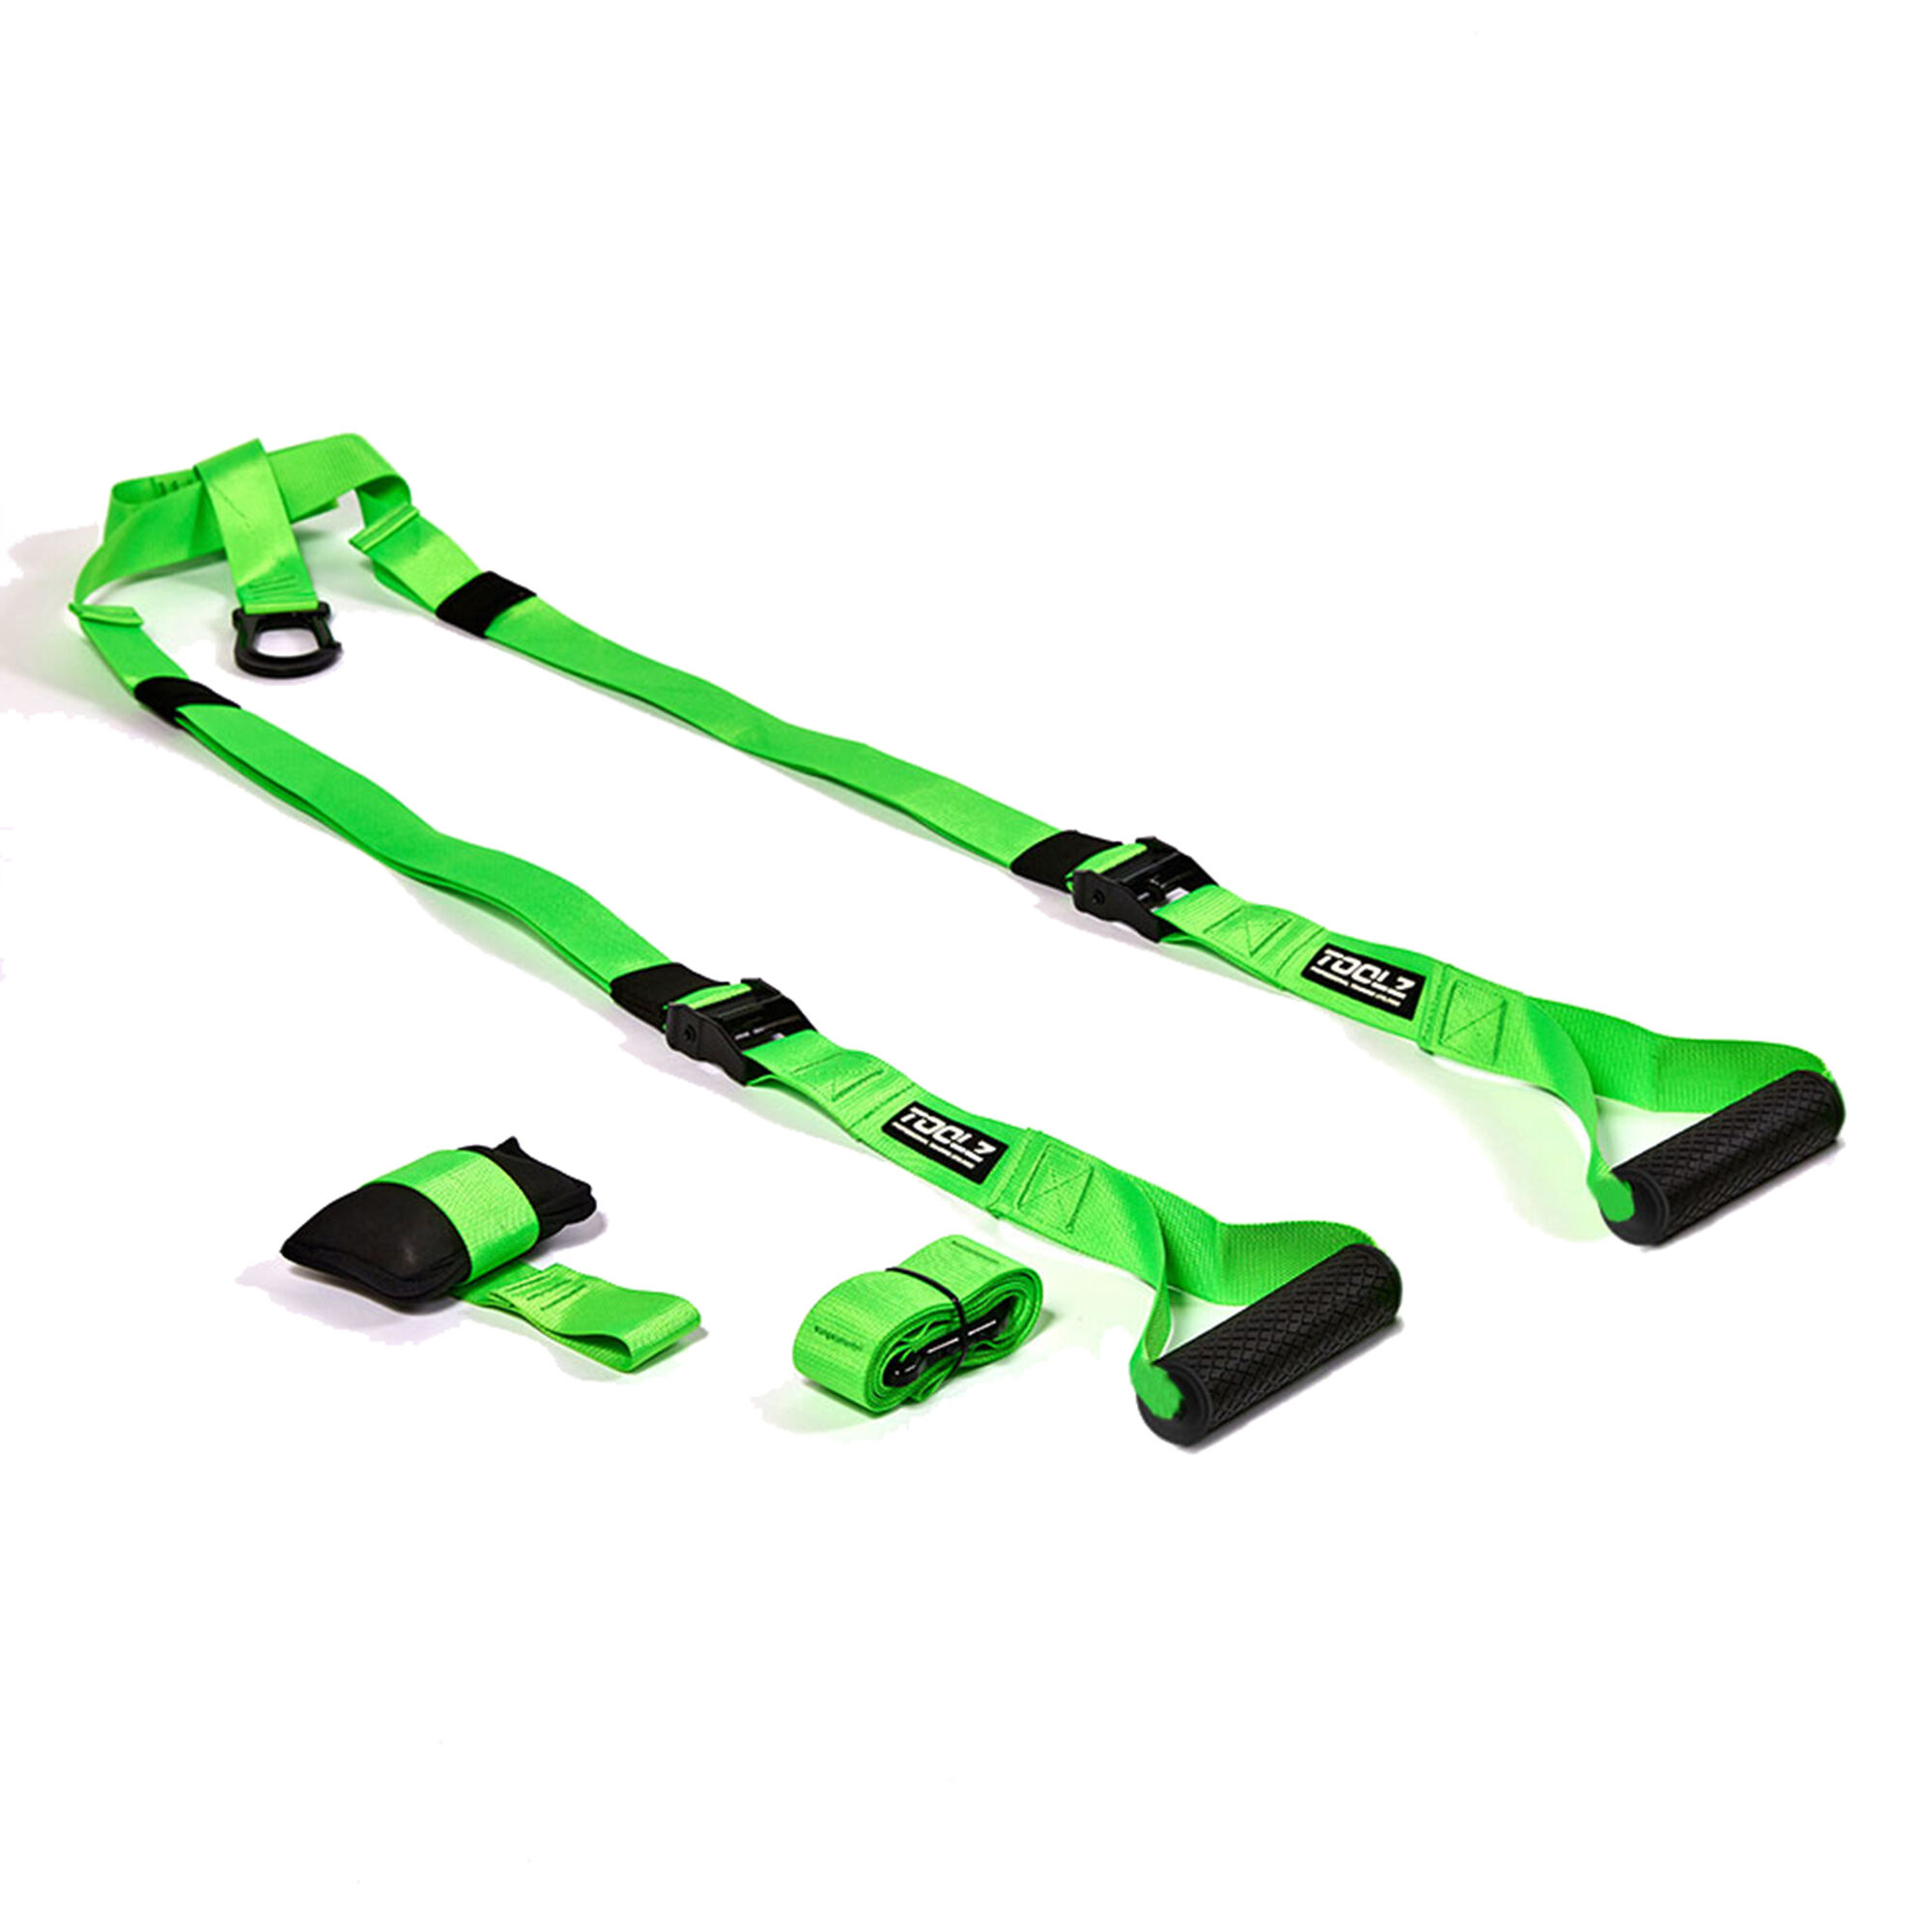 Sling Trainer Training Device - Green, Black